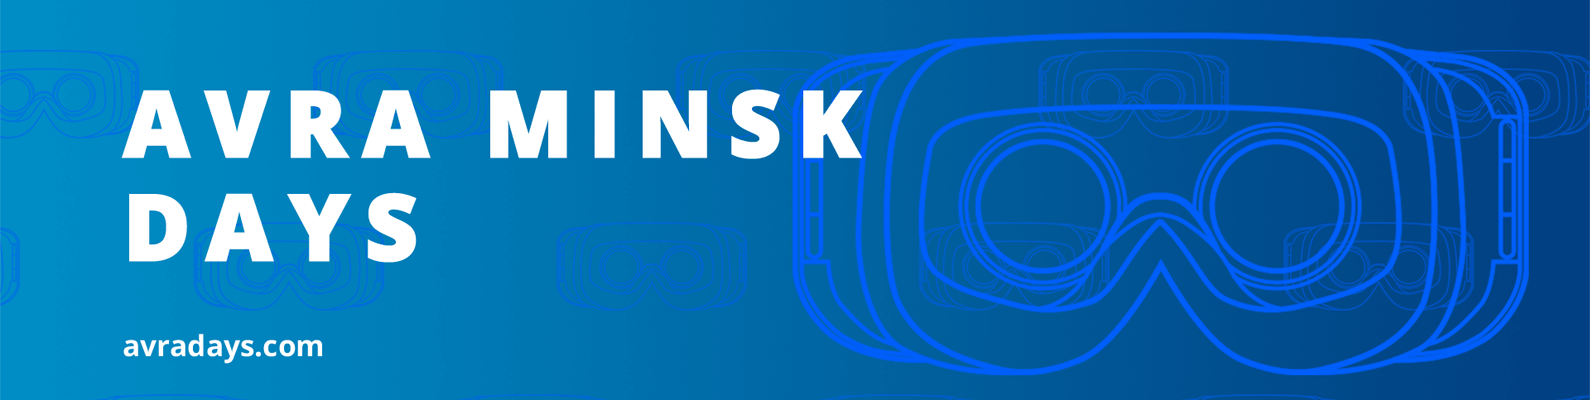 AVRA MINSK DAYS: конференция и хакатон о VR/AR-технологиях в Минске